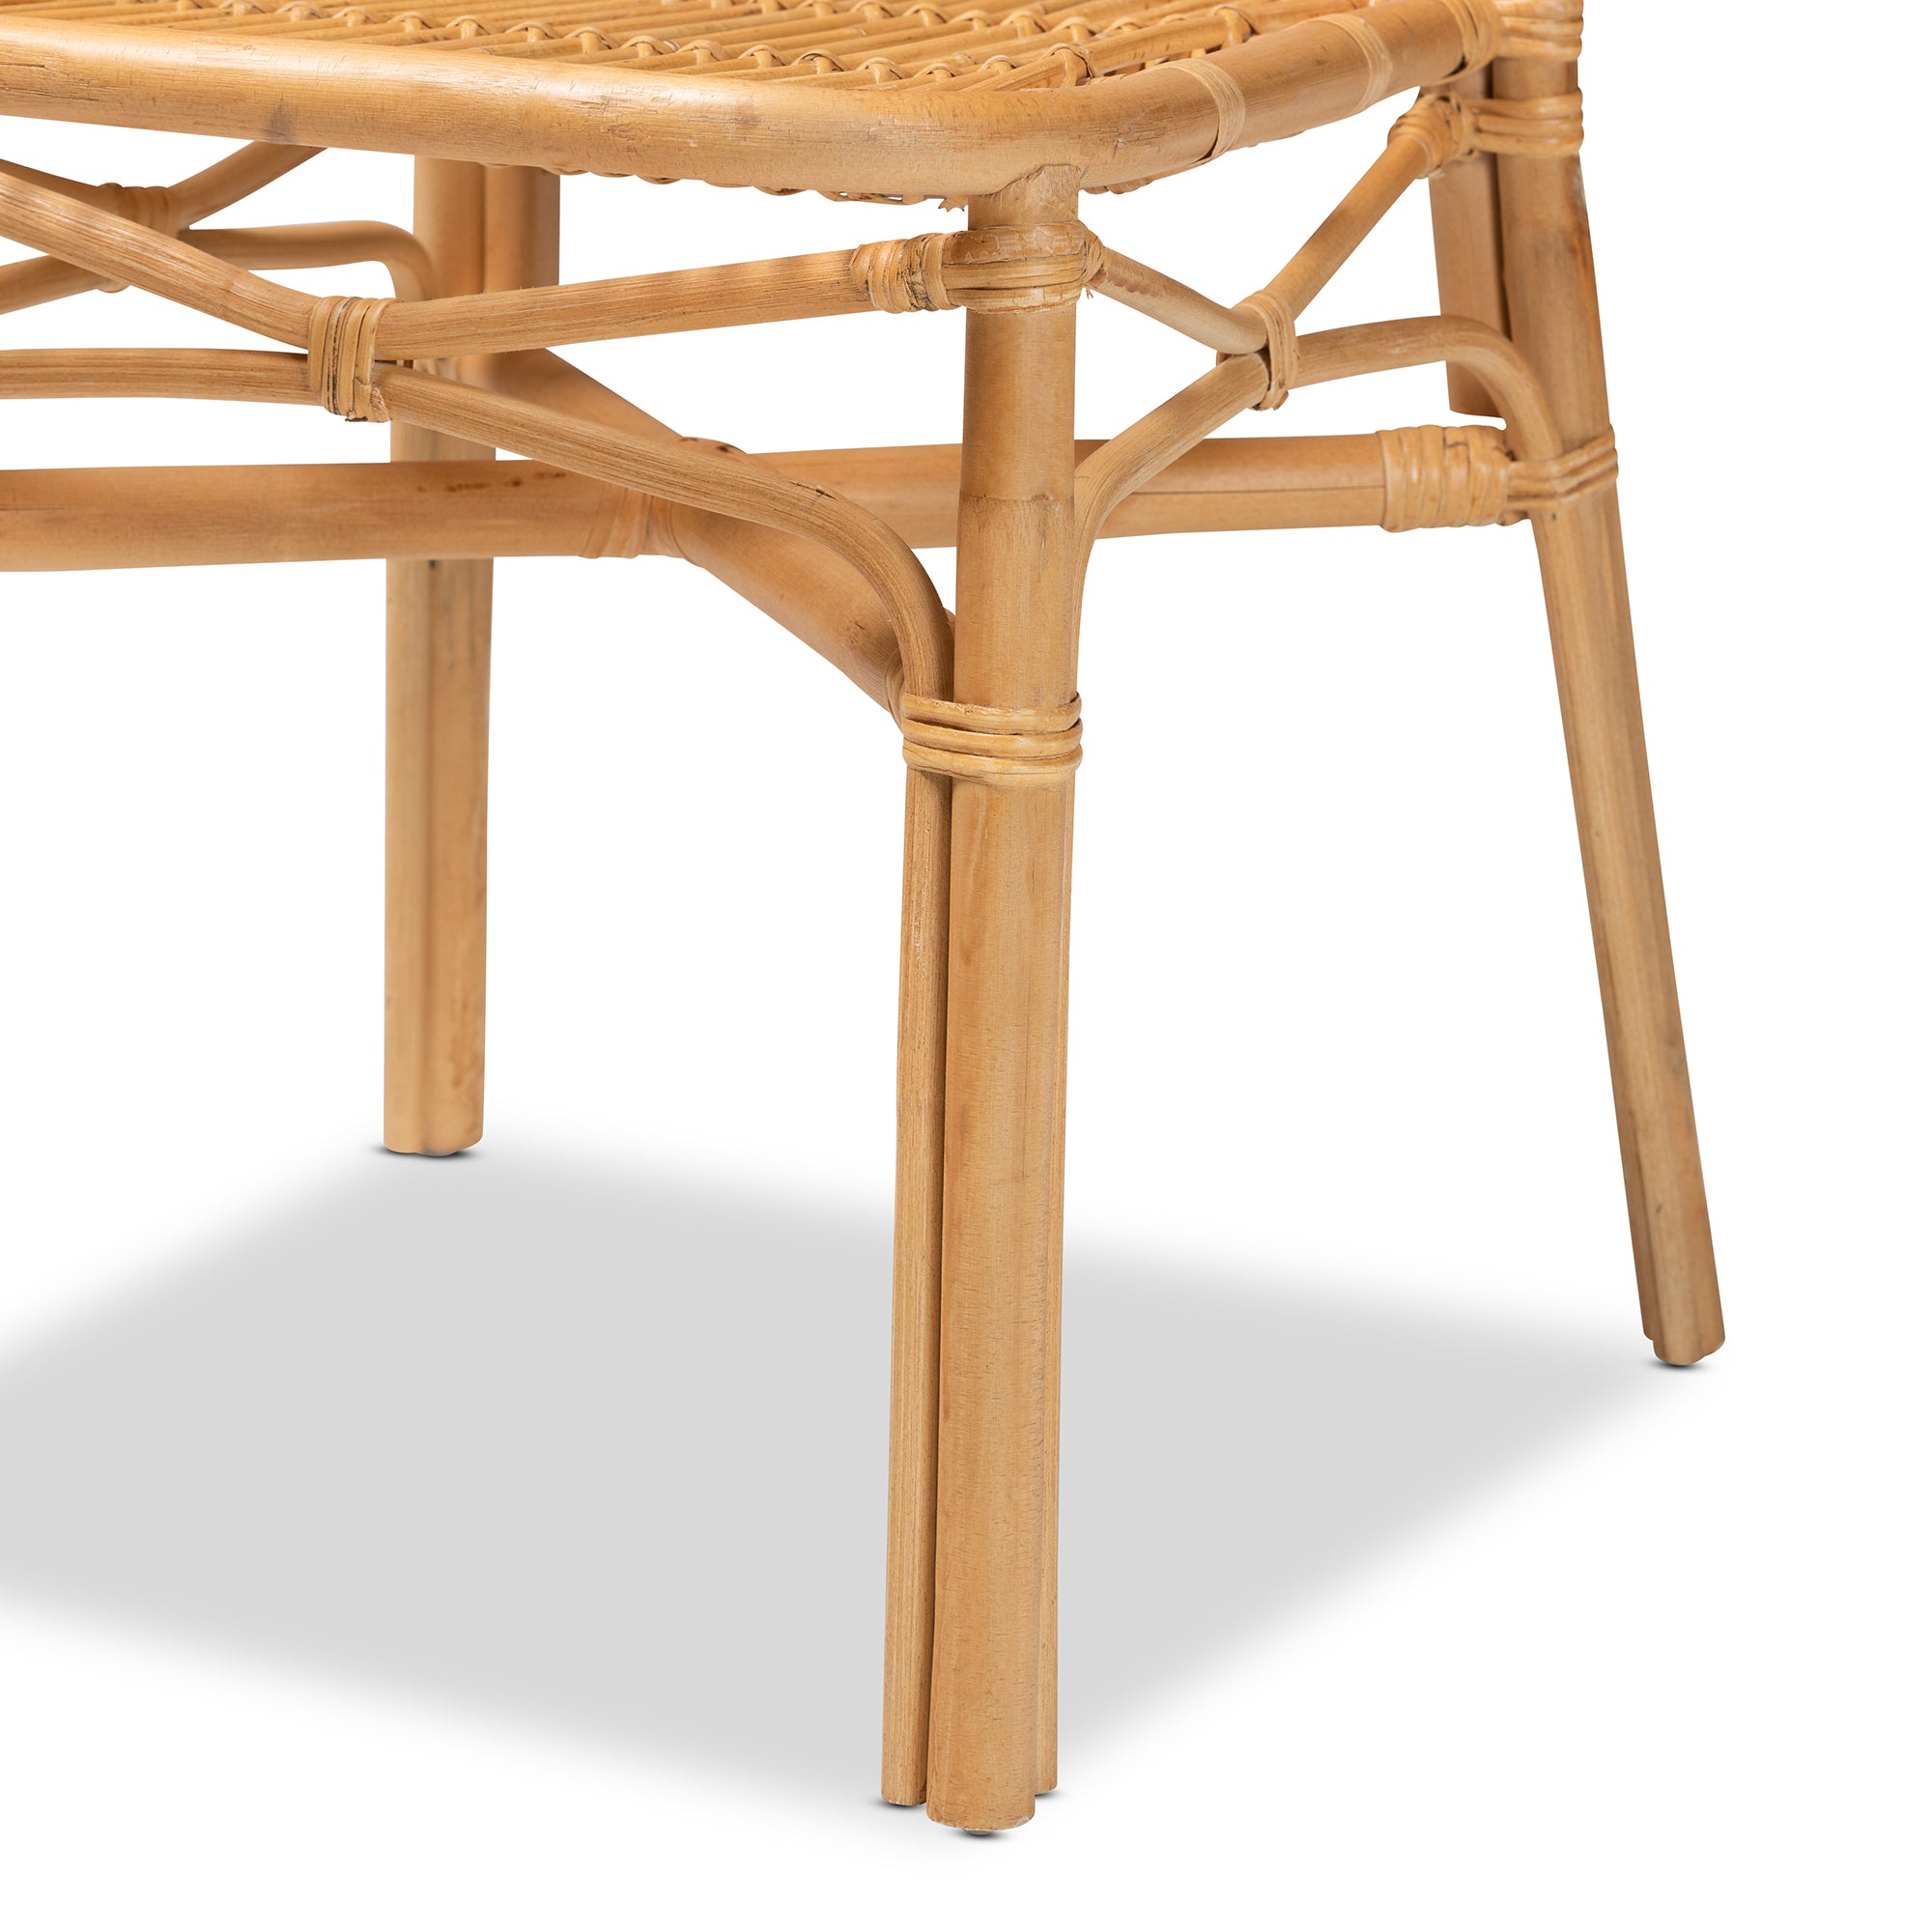 Ivora Bohemian Dining Chairs 2-Piece-Dining Chairs-Baxton Studio - WI-Wall2Wall Furnishings